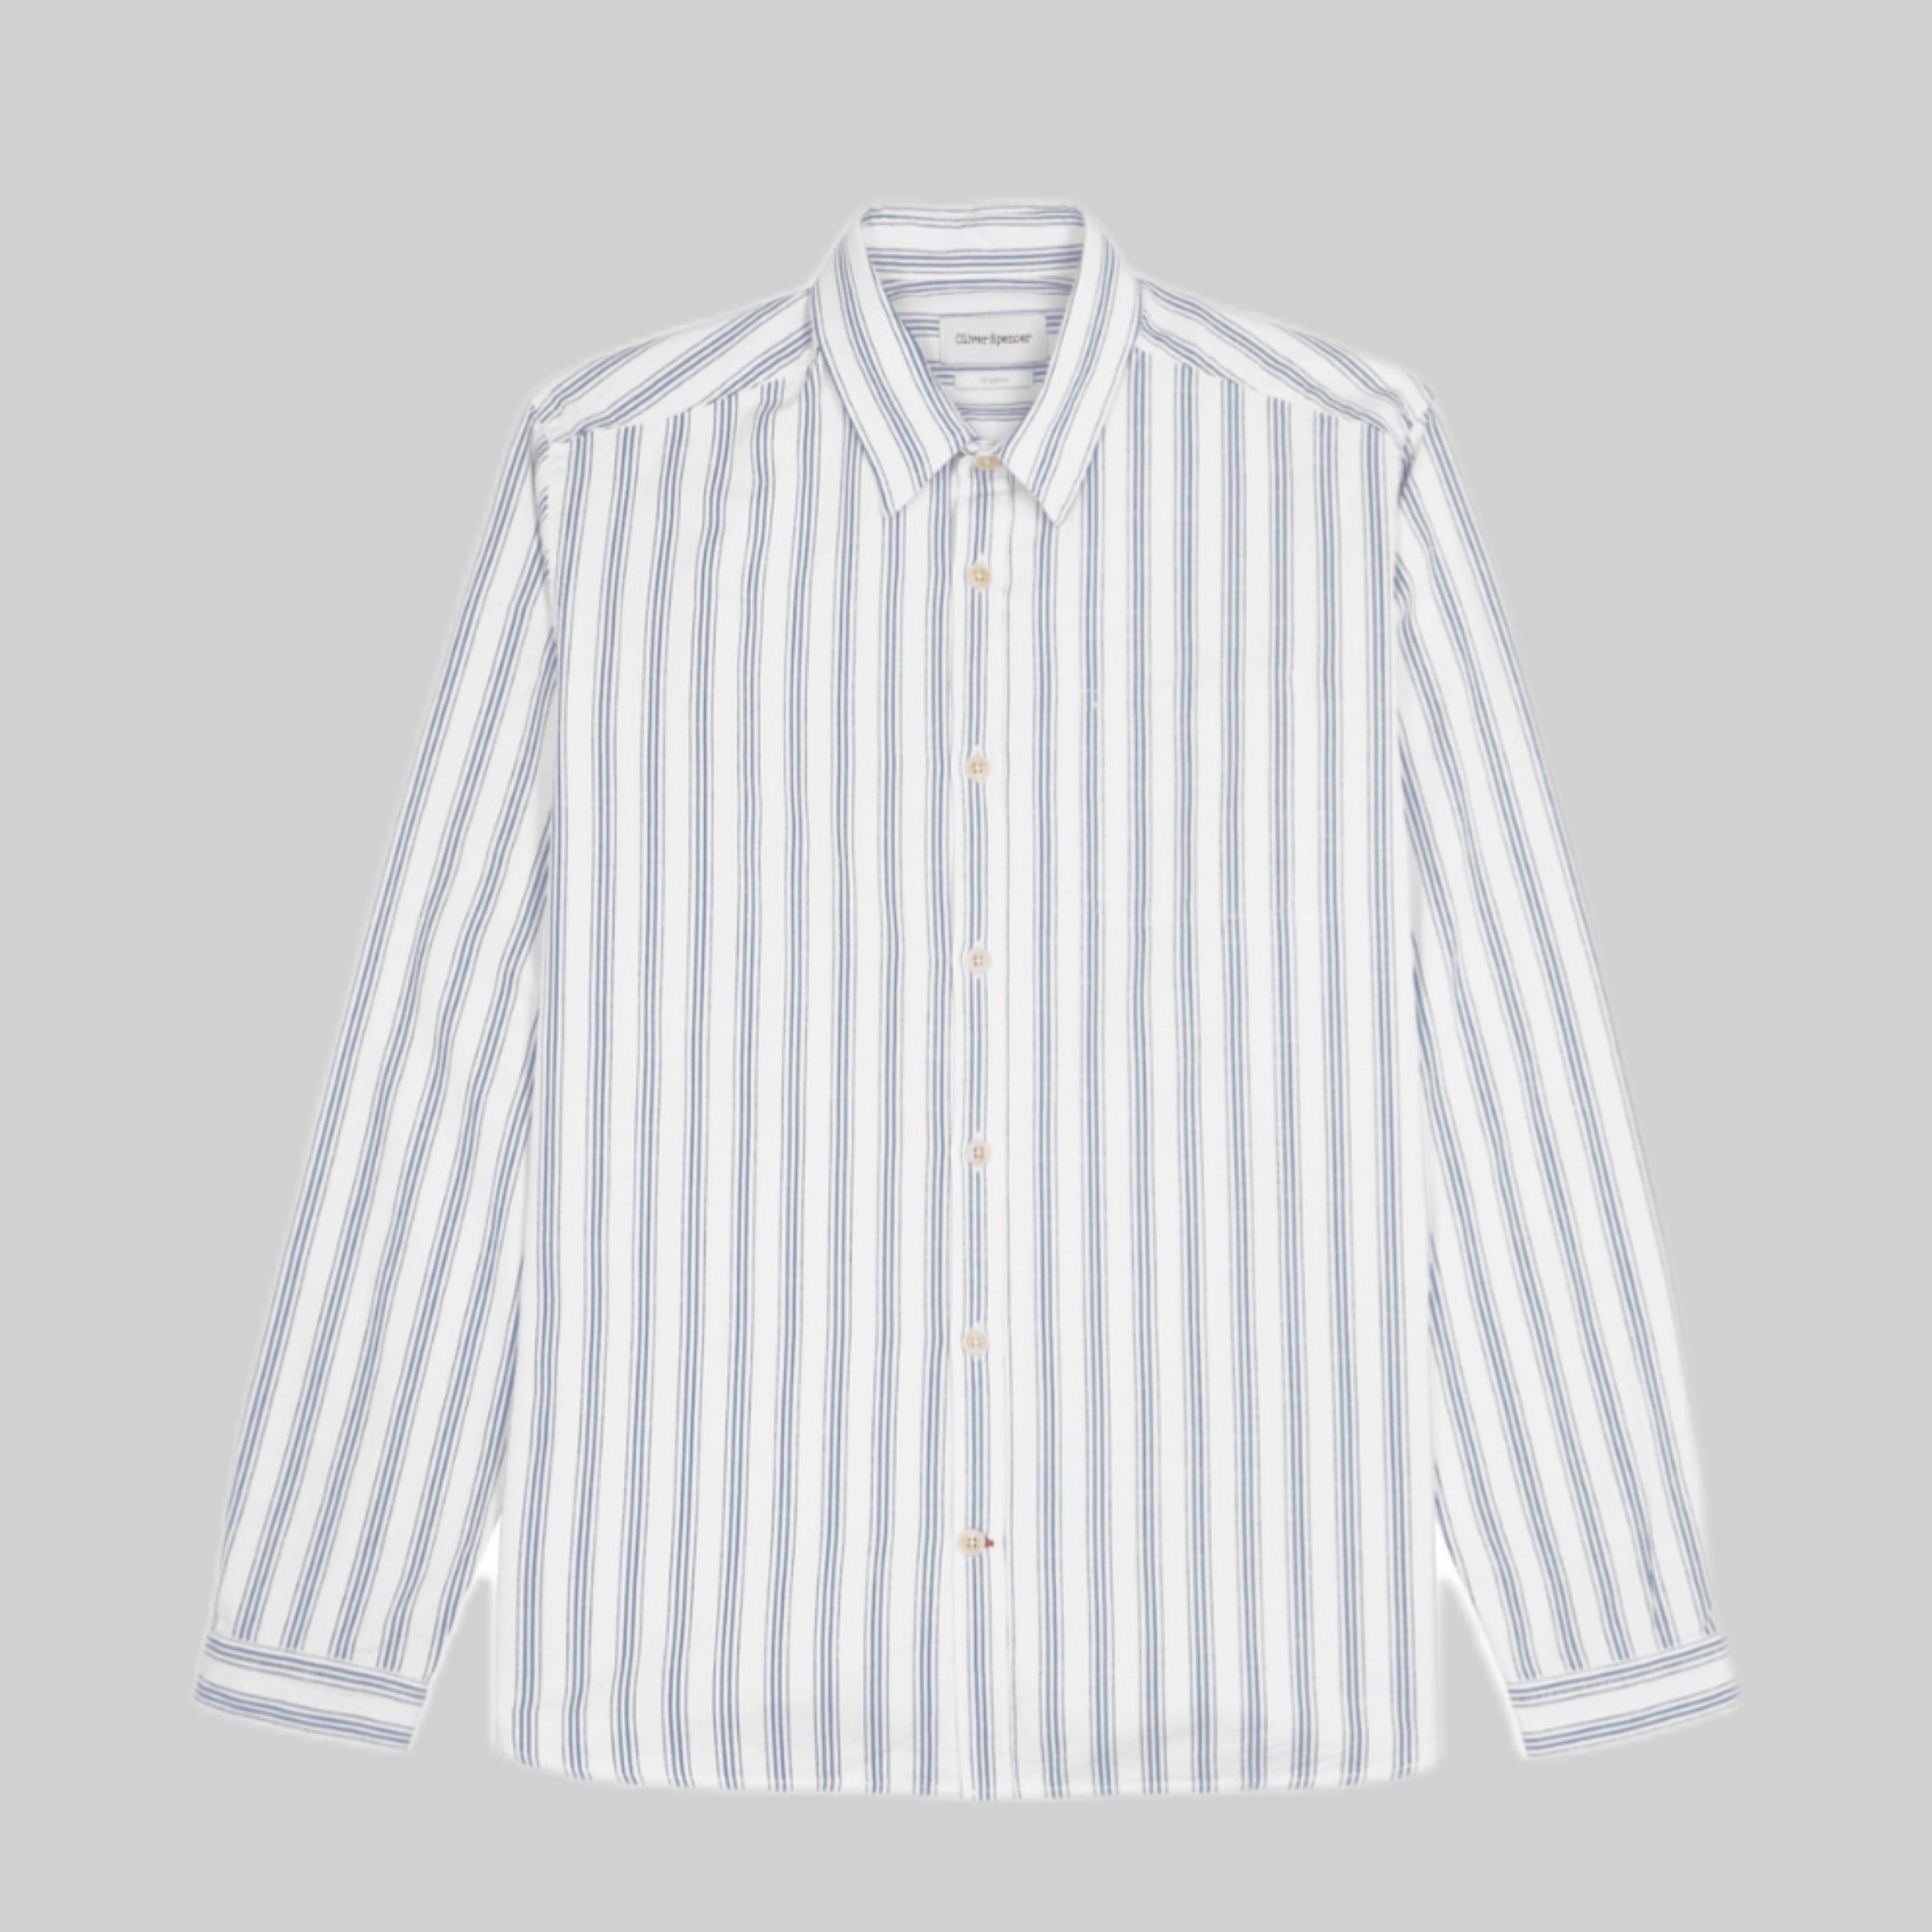 OLIVER SPENCER shirt, men, striped, white, frontsdie